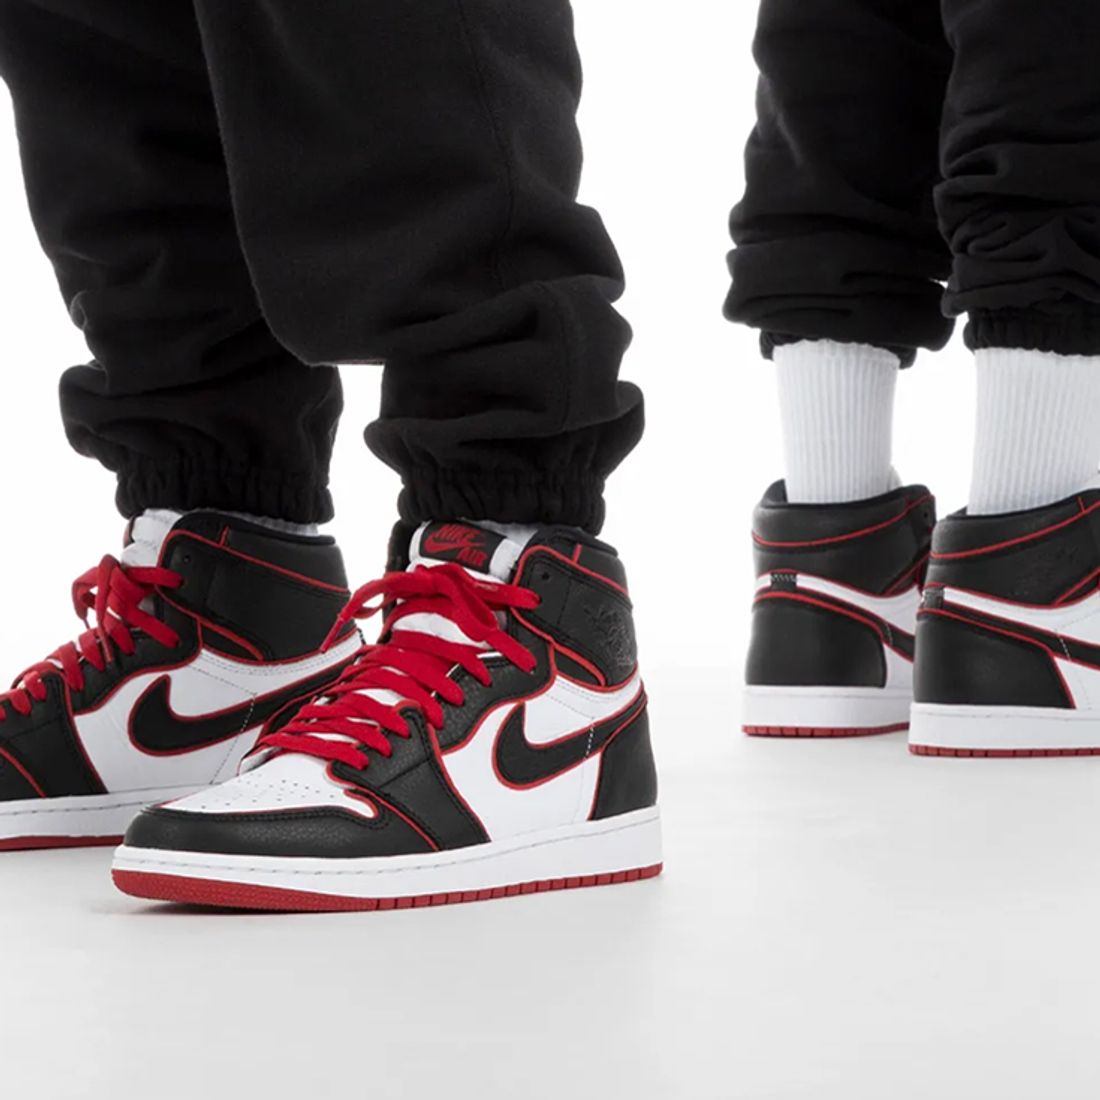 Pasto Dolor Adaptado Where to Buy the Air Jordan 1 'Bloodline' - Sneaker Freaker